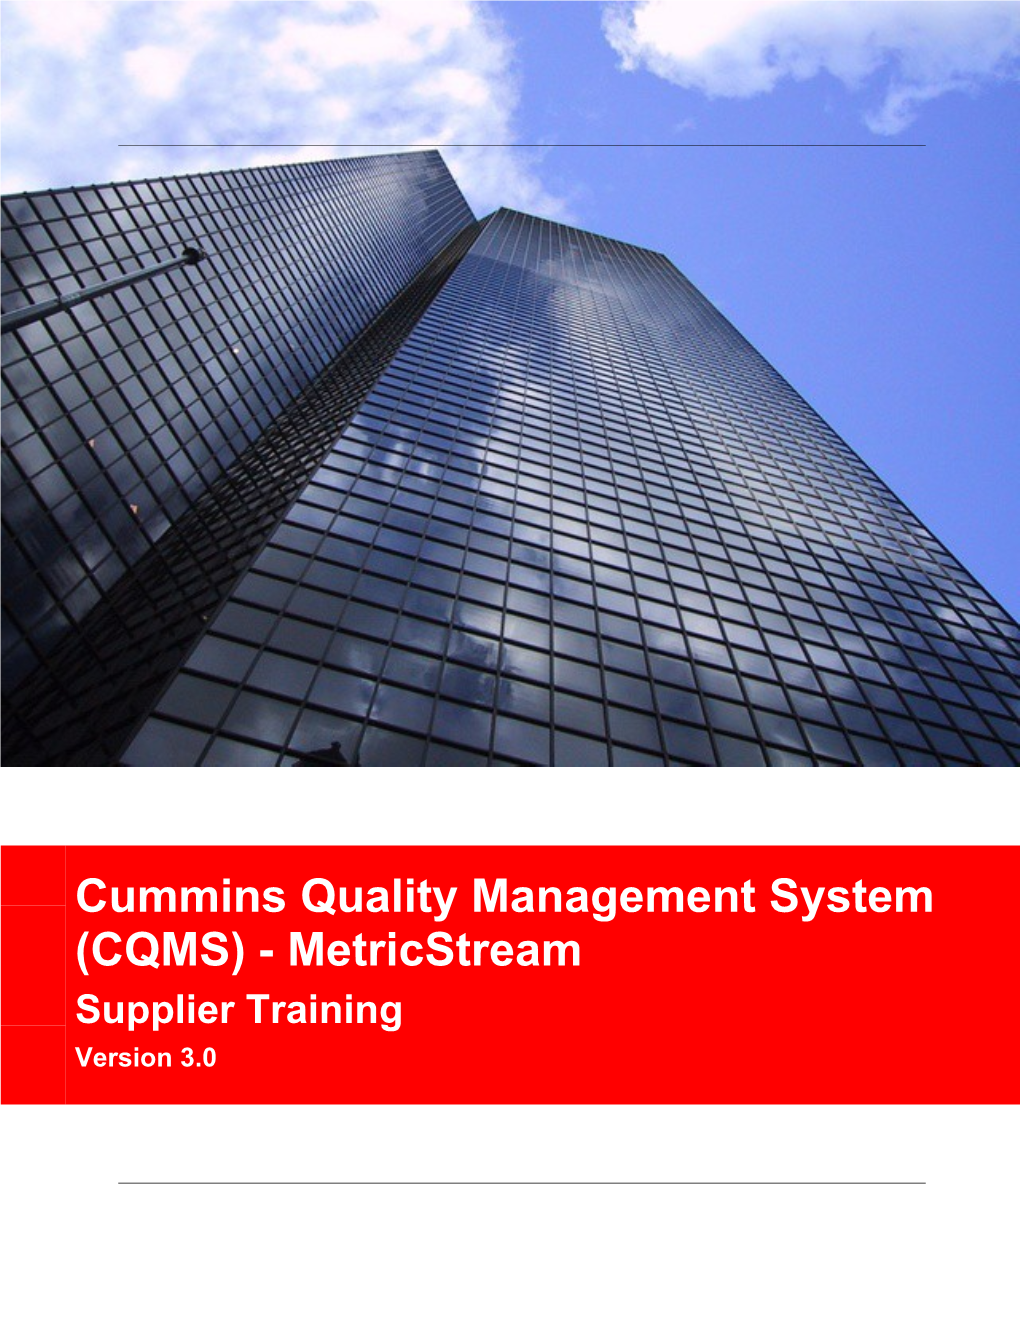 CQMS-Metricstream Supplier Training